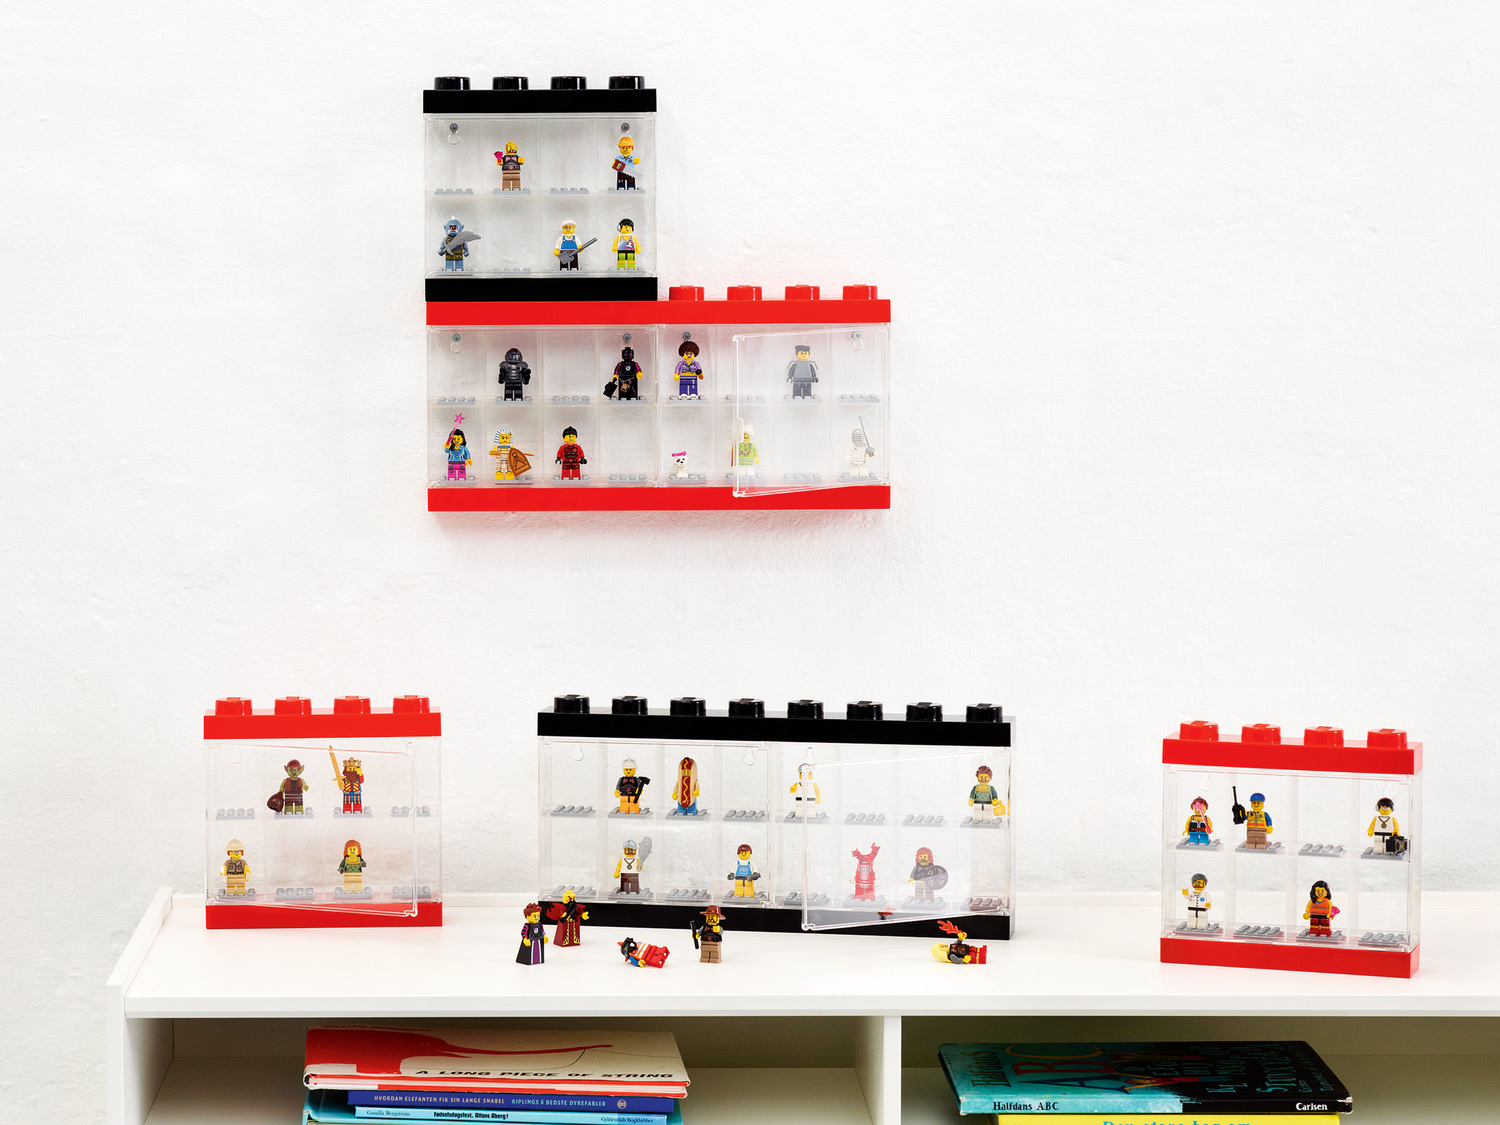 Klocki Lego 4065 Lego, cena 49,99 PLN  
-  gablotka na 8 minifigurek
Opis